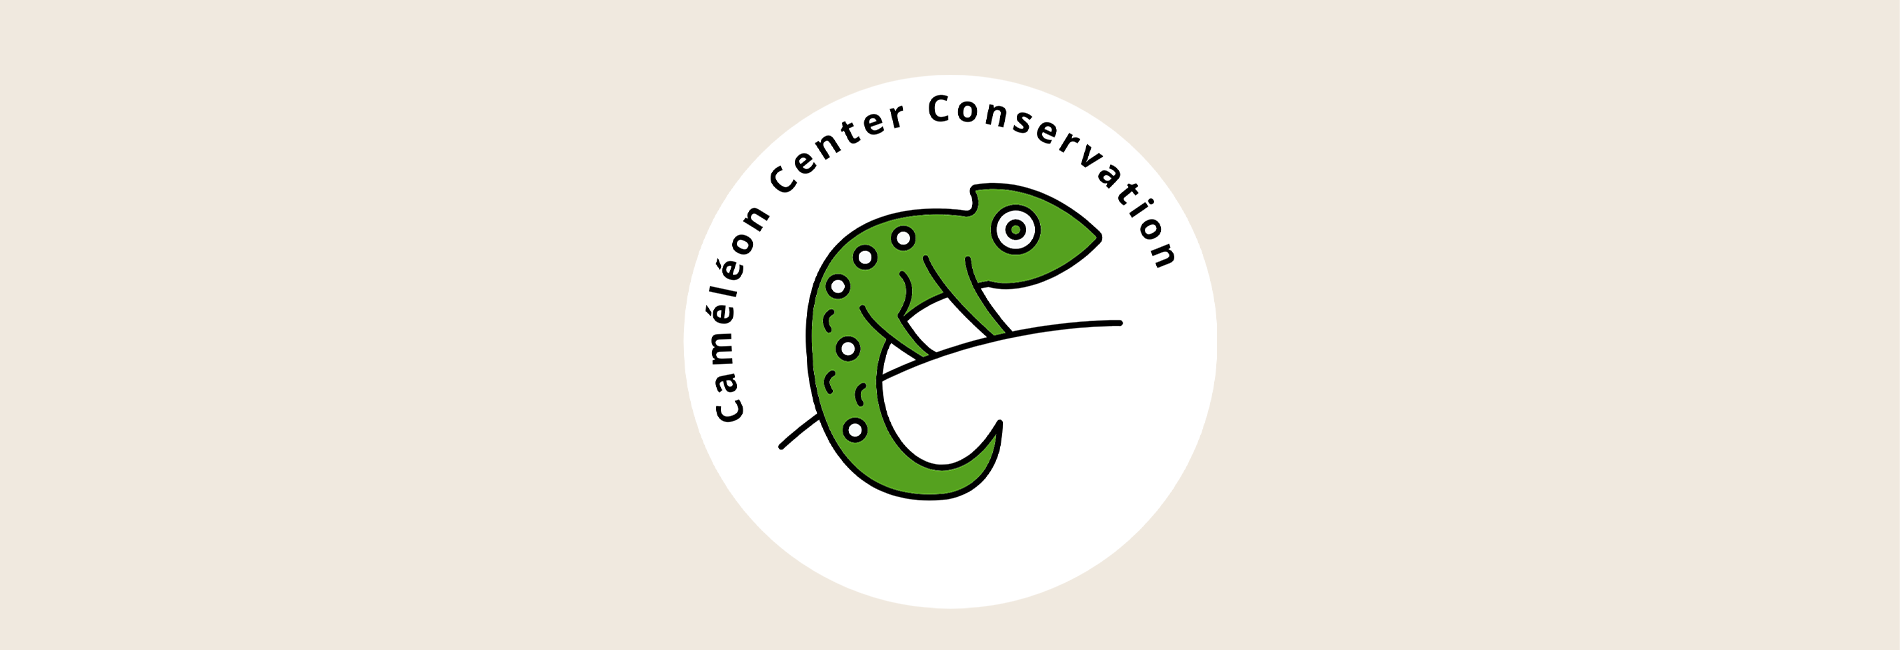 Cameleon Center Conservation